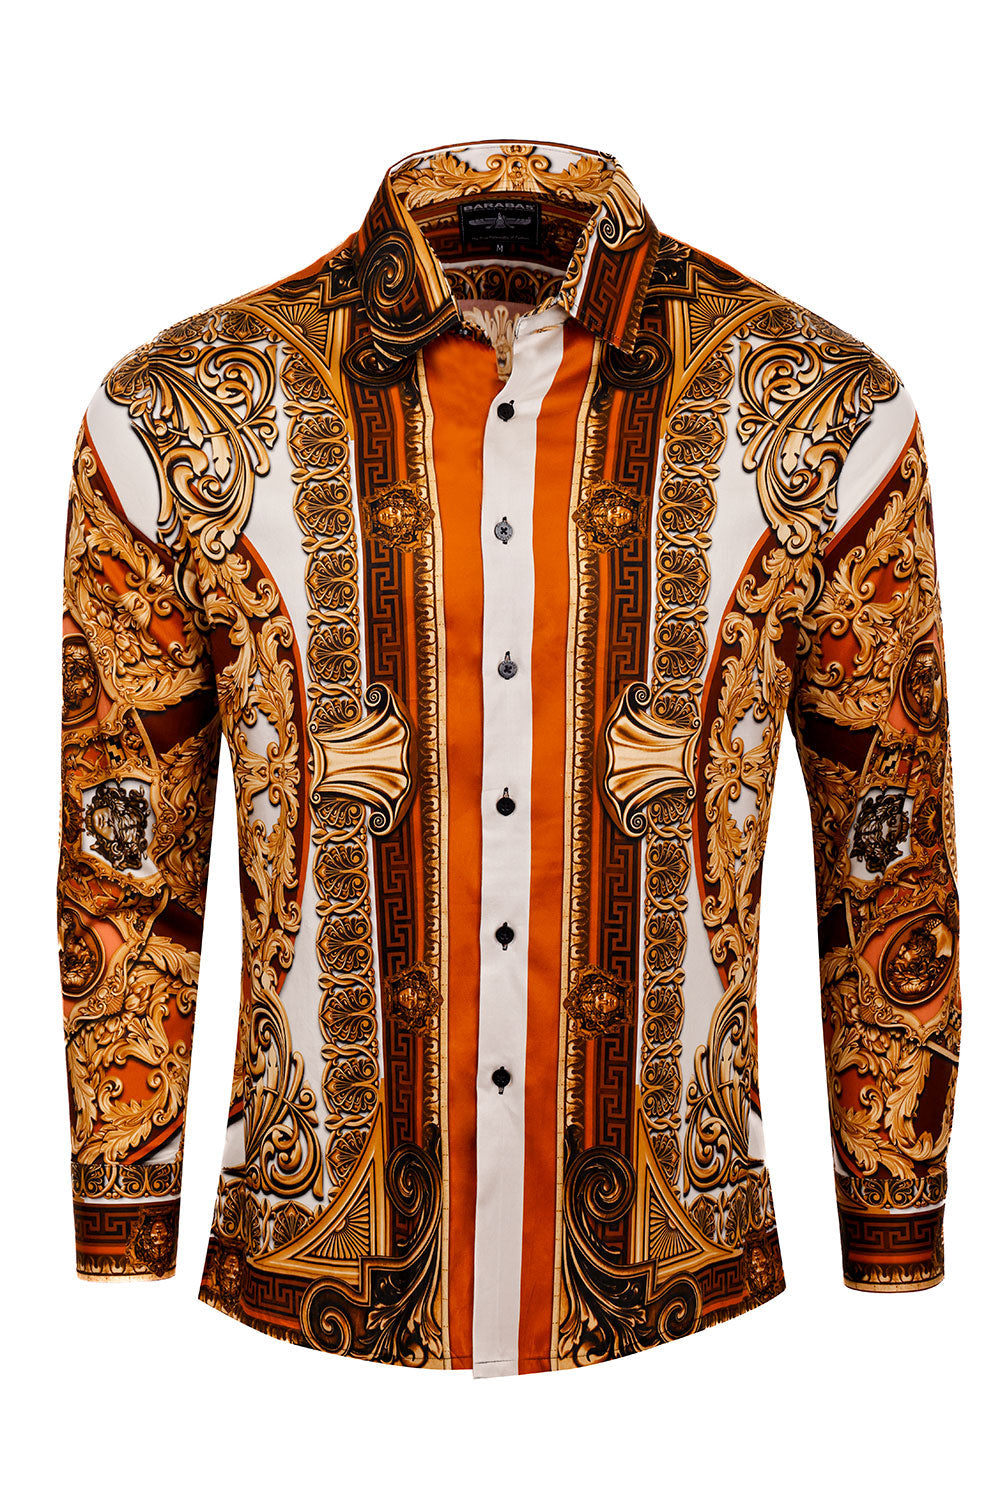 BARABAS Men's Rhinestone Medusa Floral Long Sleeve Shirts 3SPR416 Cream